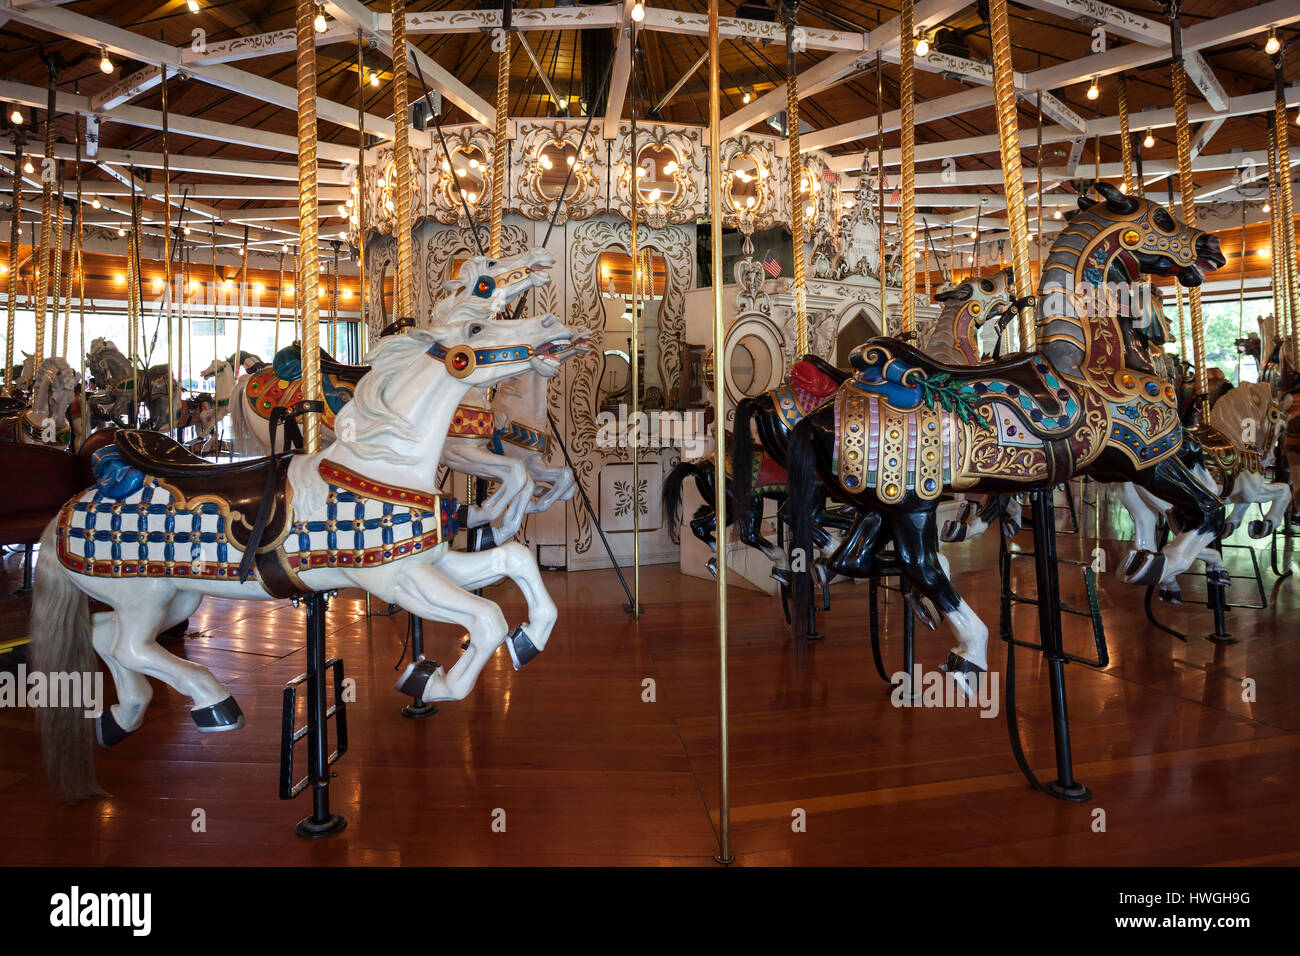 Historical children's merry-go-round with horses, Spokane, Washington, USA Stock Photo